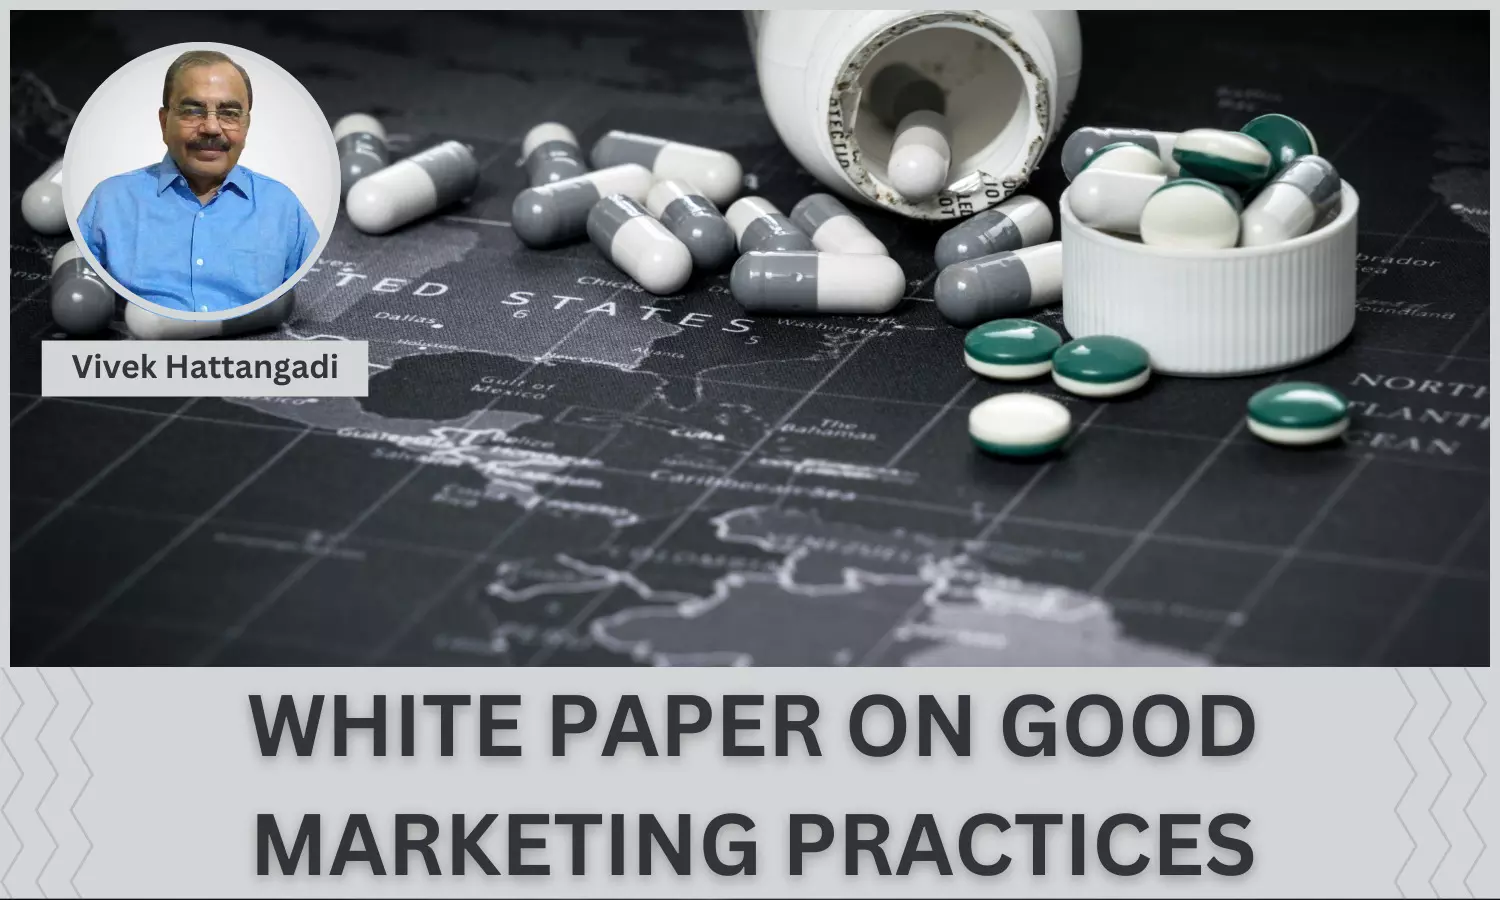 White Paper On Good Marketing Practices In The Pharma Industry - Vivek Hattangadi